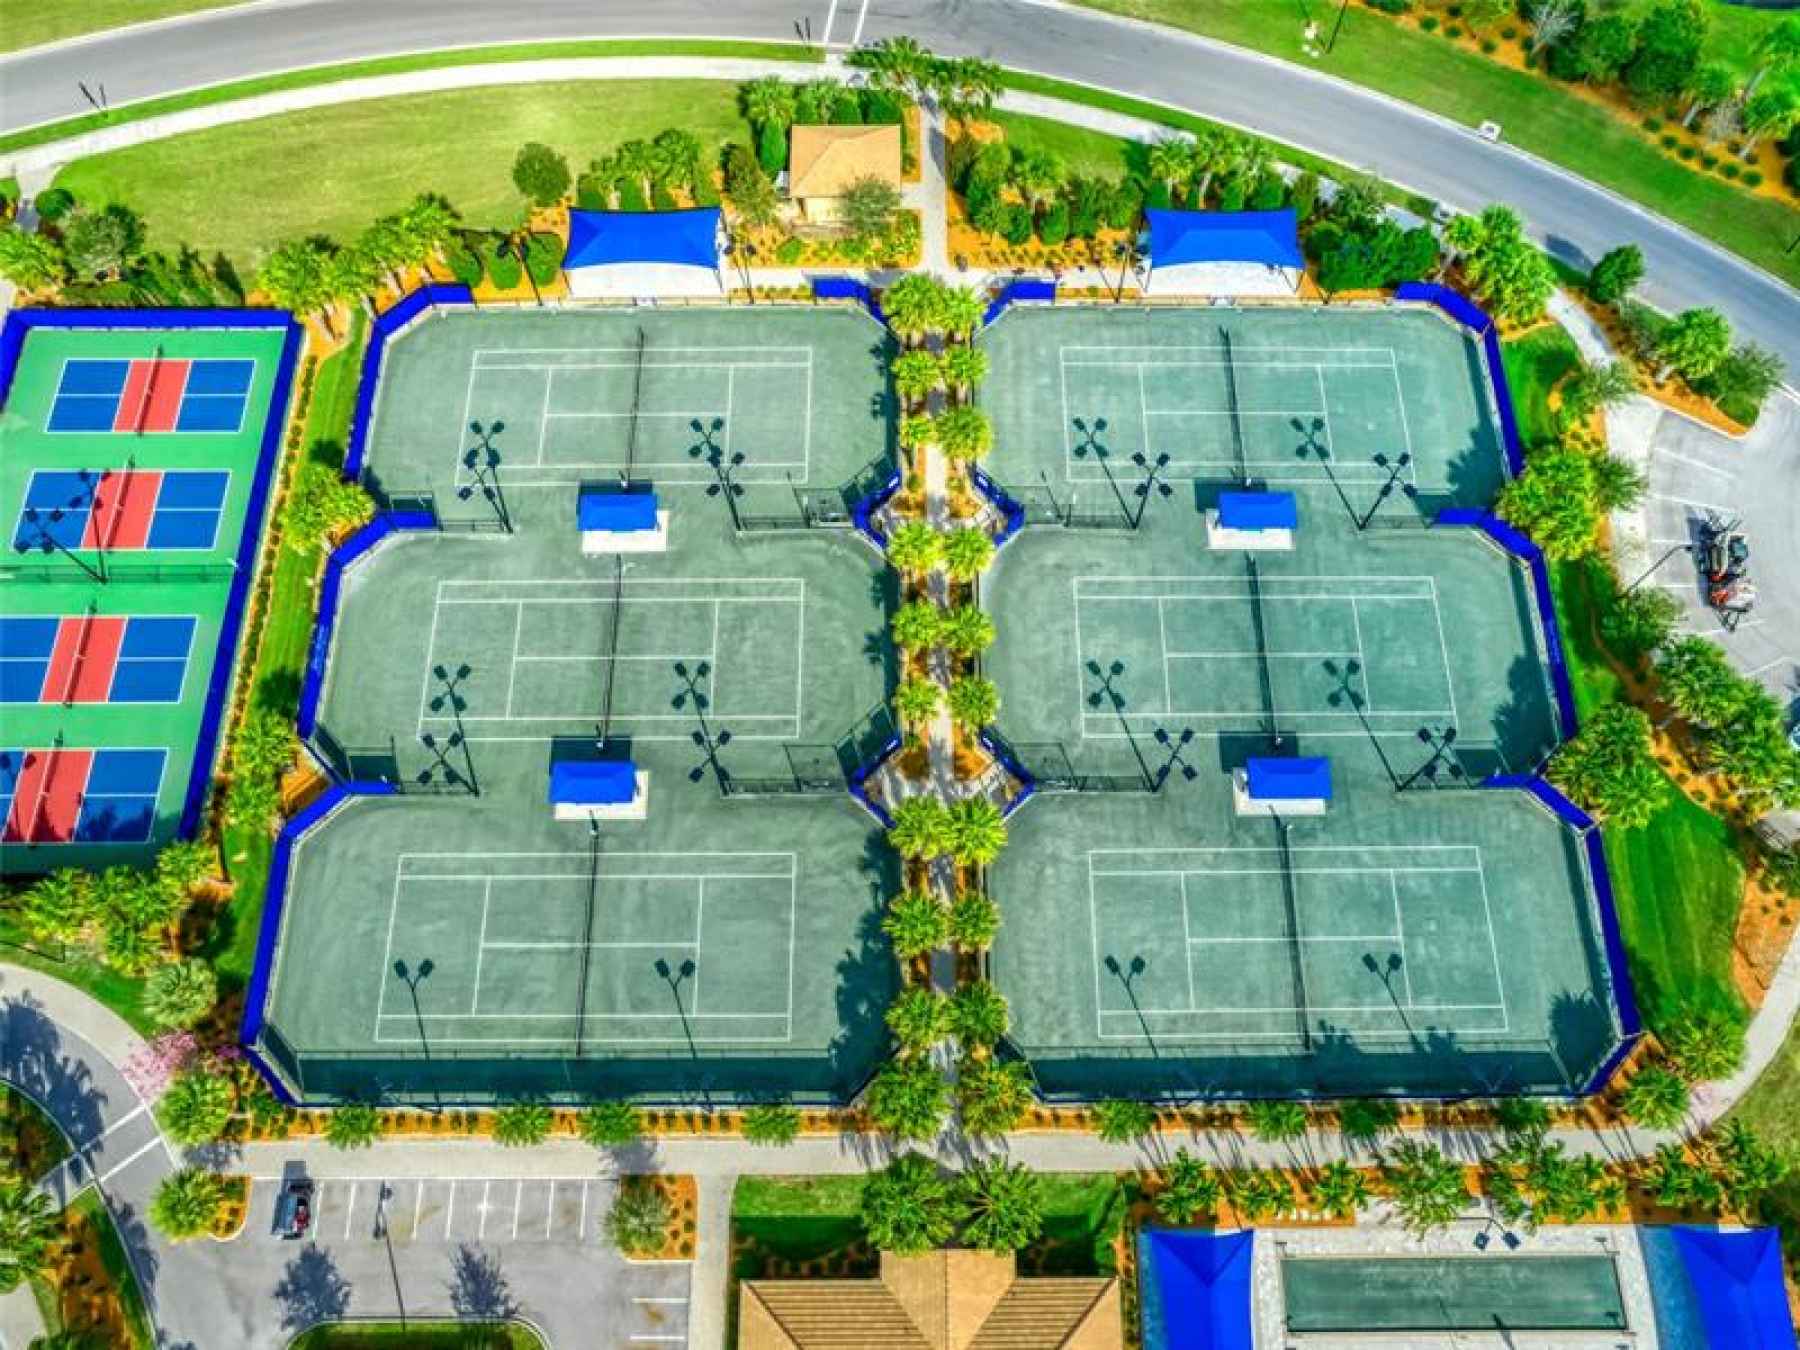 Enjoy 6 Tennis Courts with HarTru surface